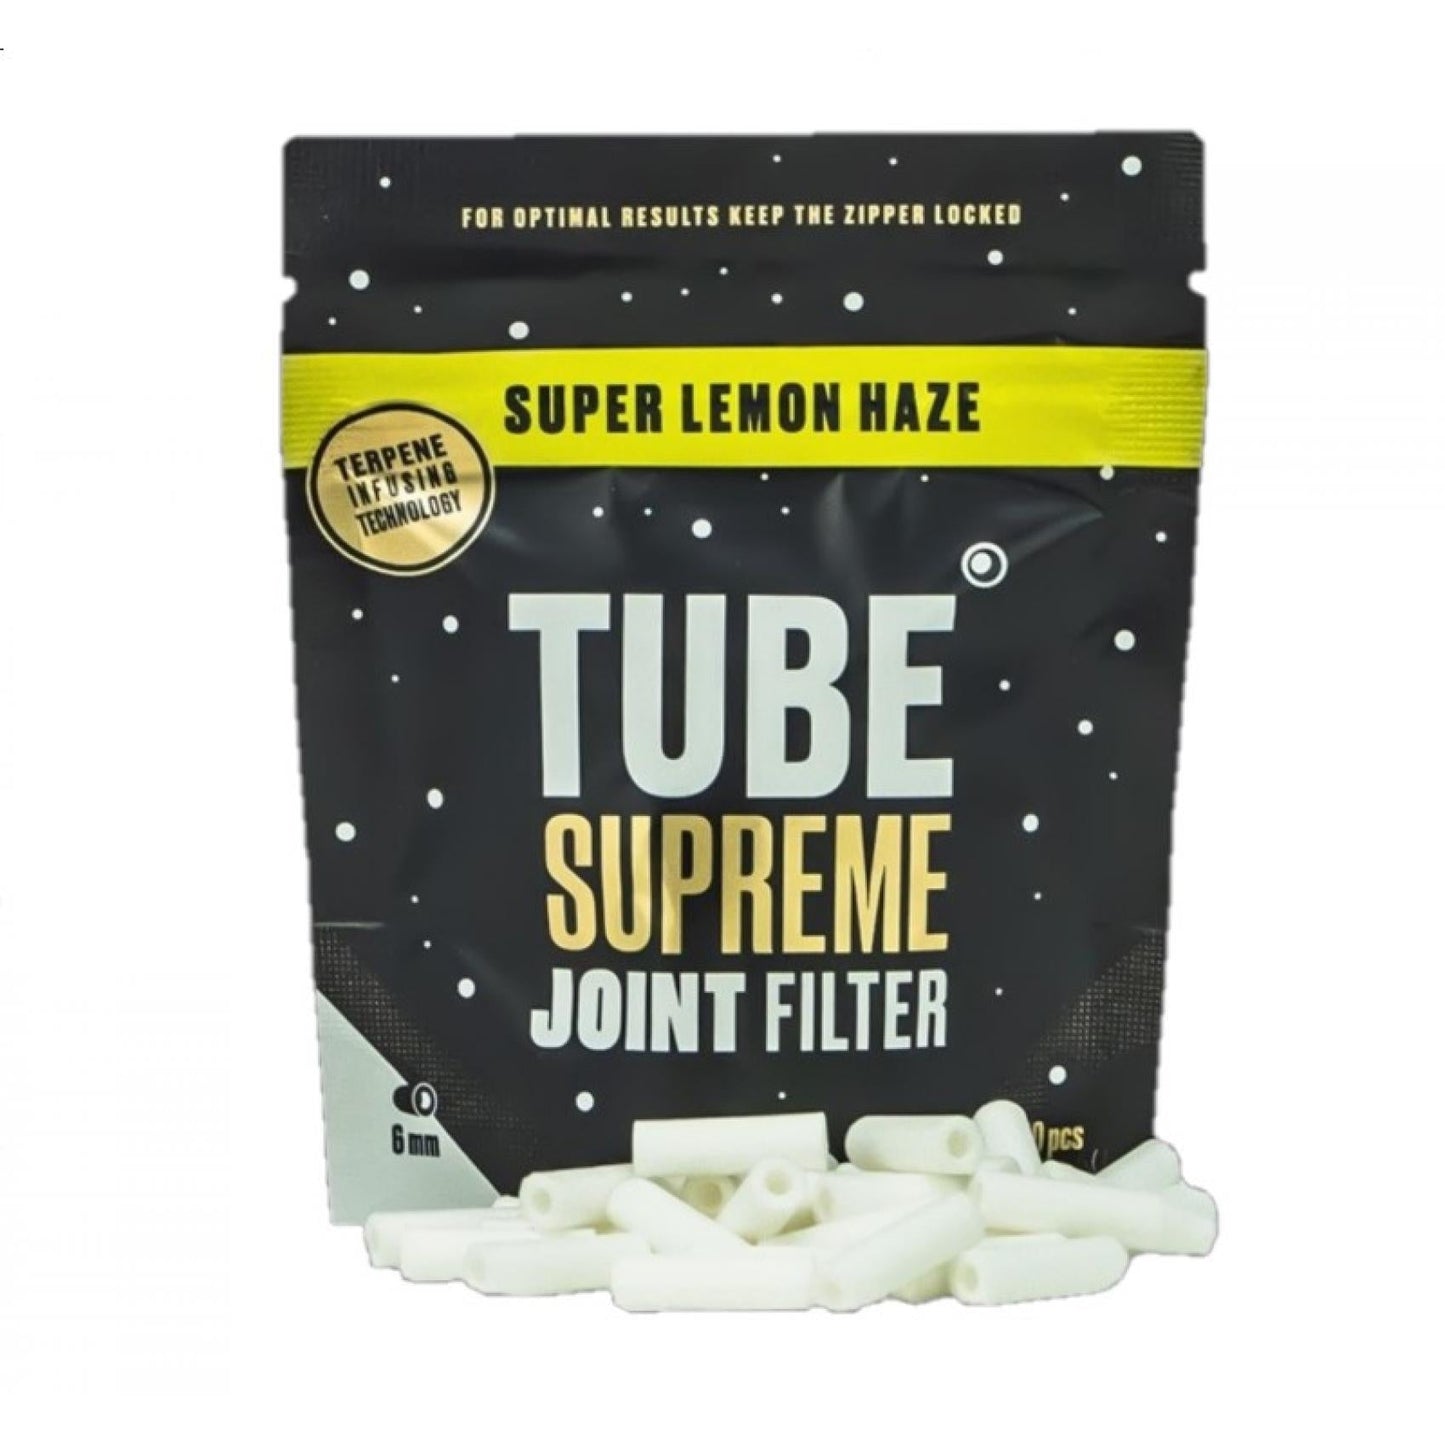 Tube Supreme Super Lemon Haze